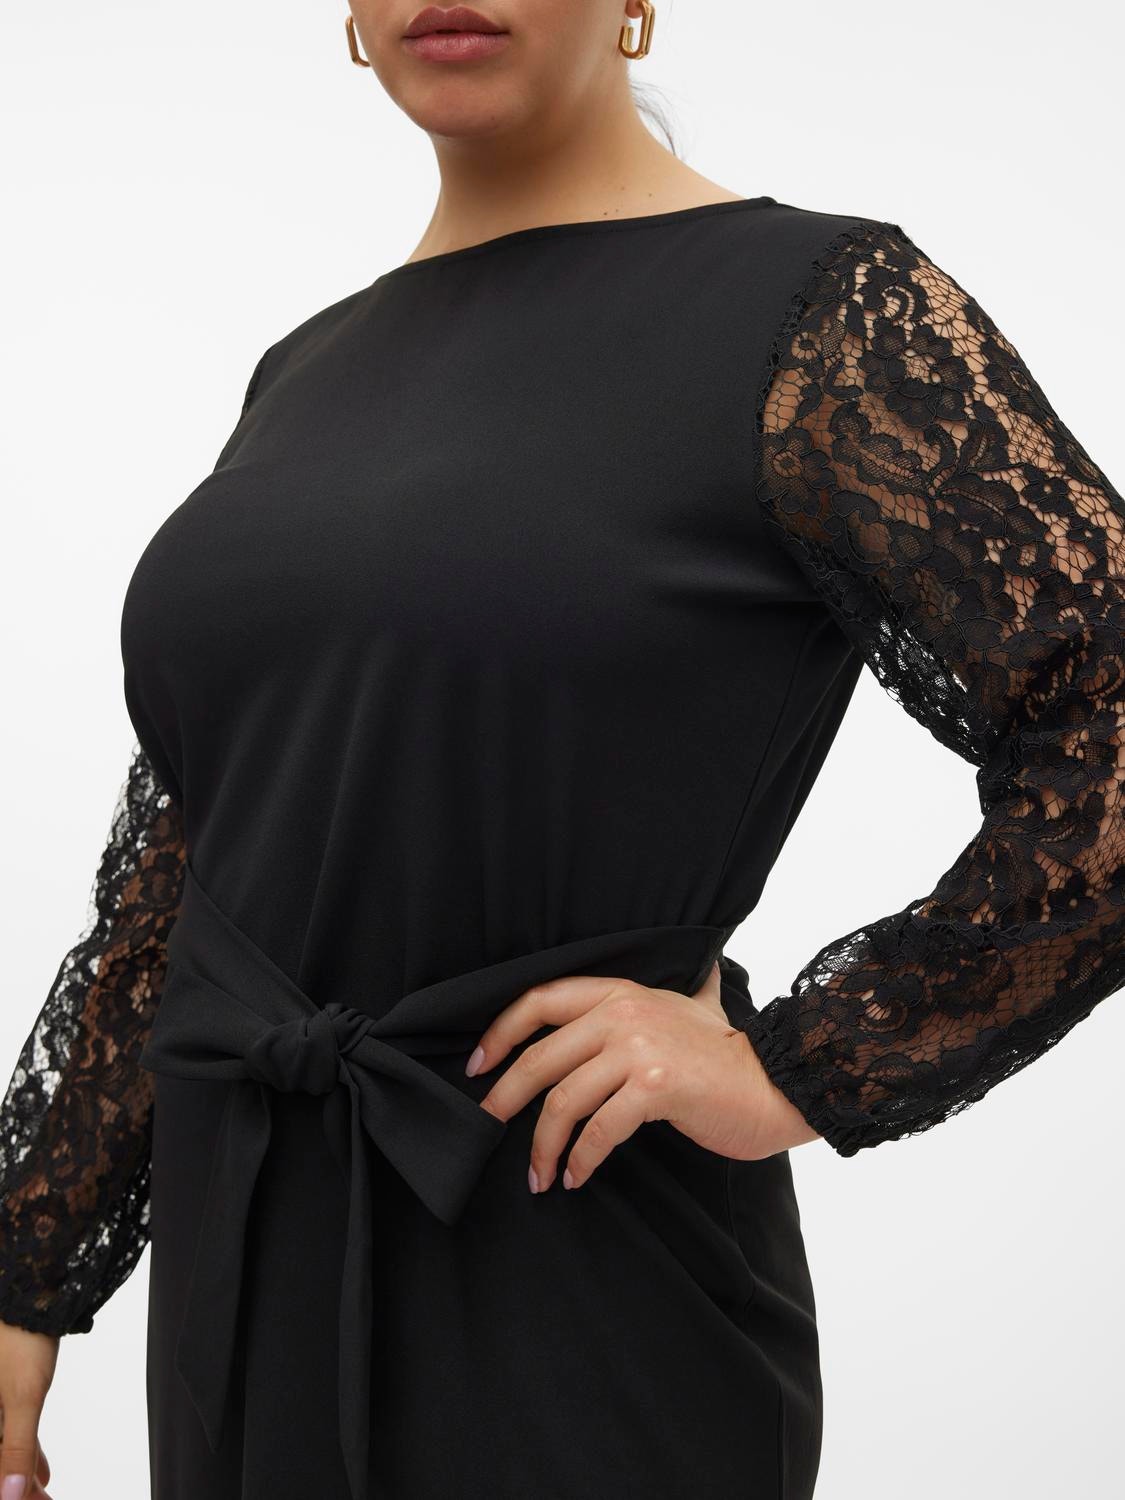 Vero Moda VMCMAGDA Długa sukienka -Black - 10307798